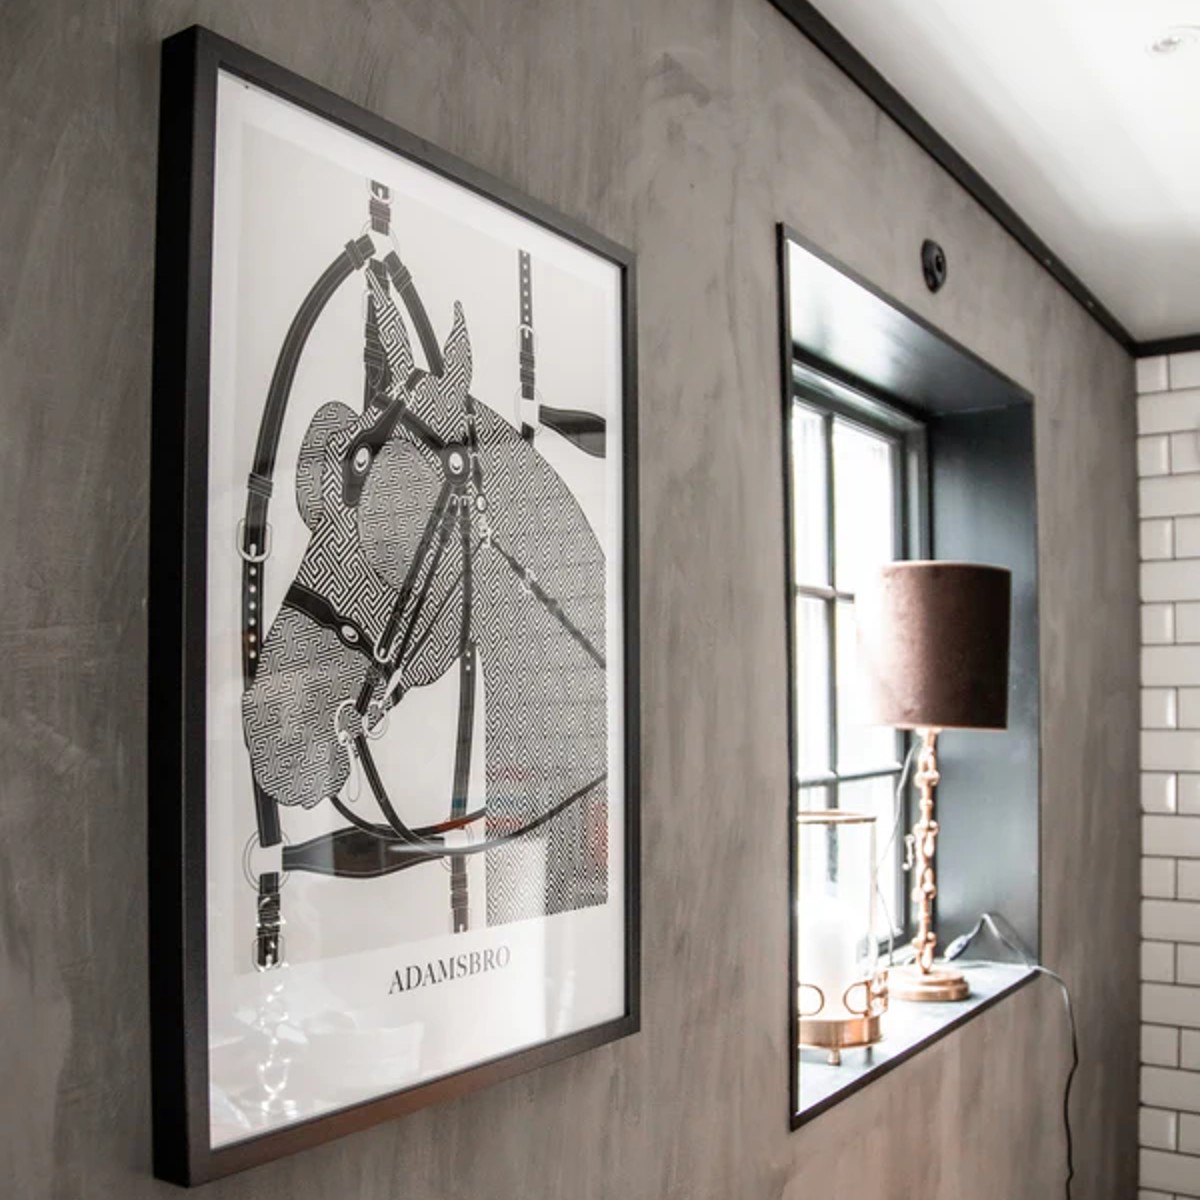 Adamsbro poster vintage noir Sellerie En Cadence Montfort l'Amaury décoration affiche cheval art